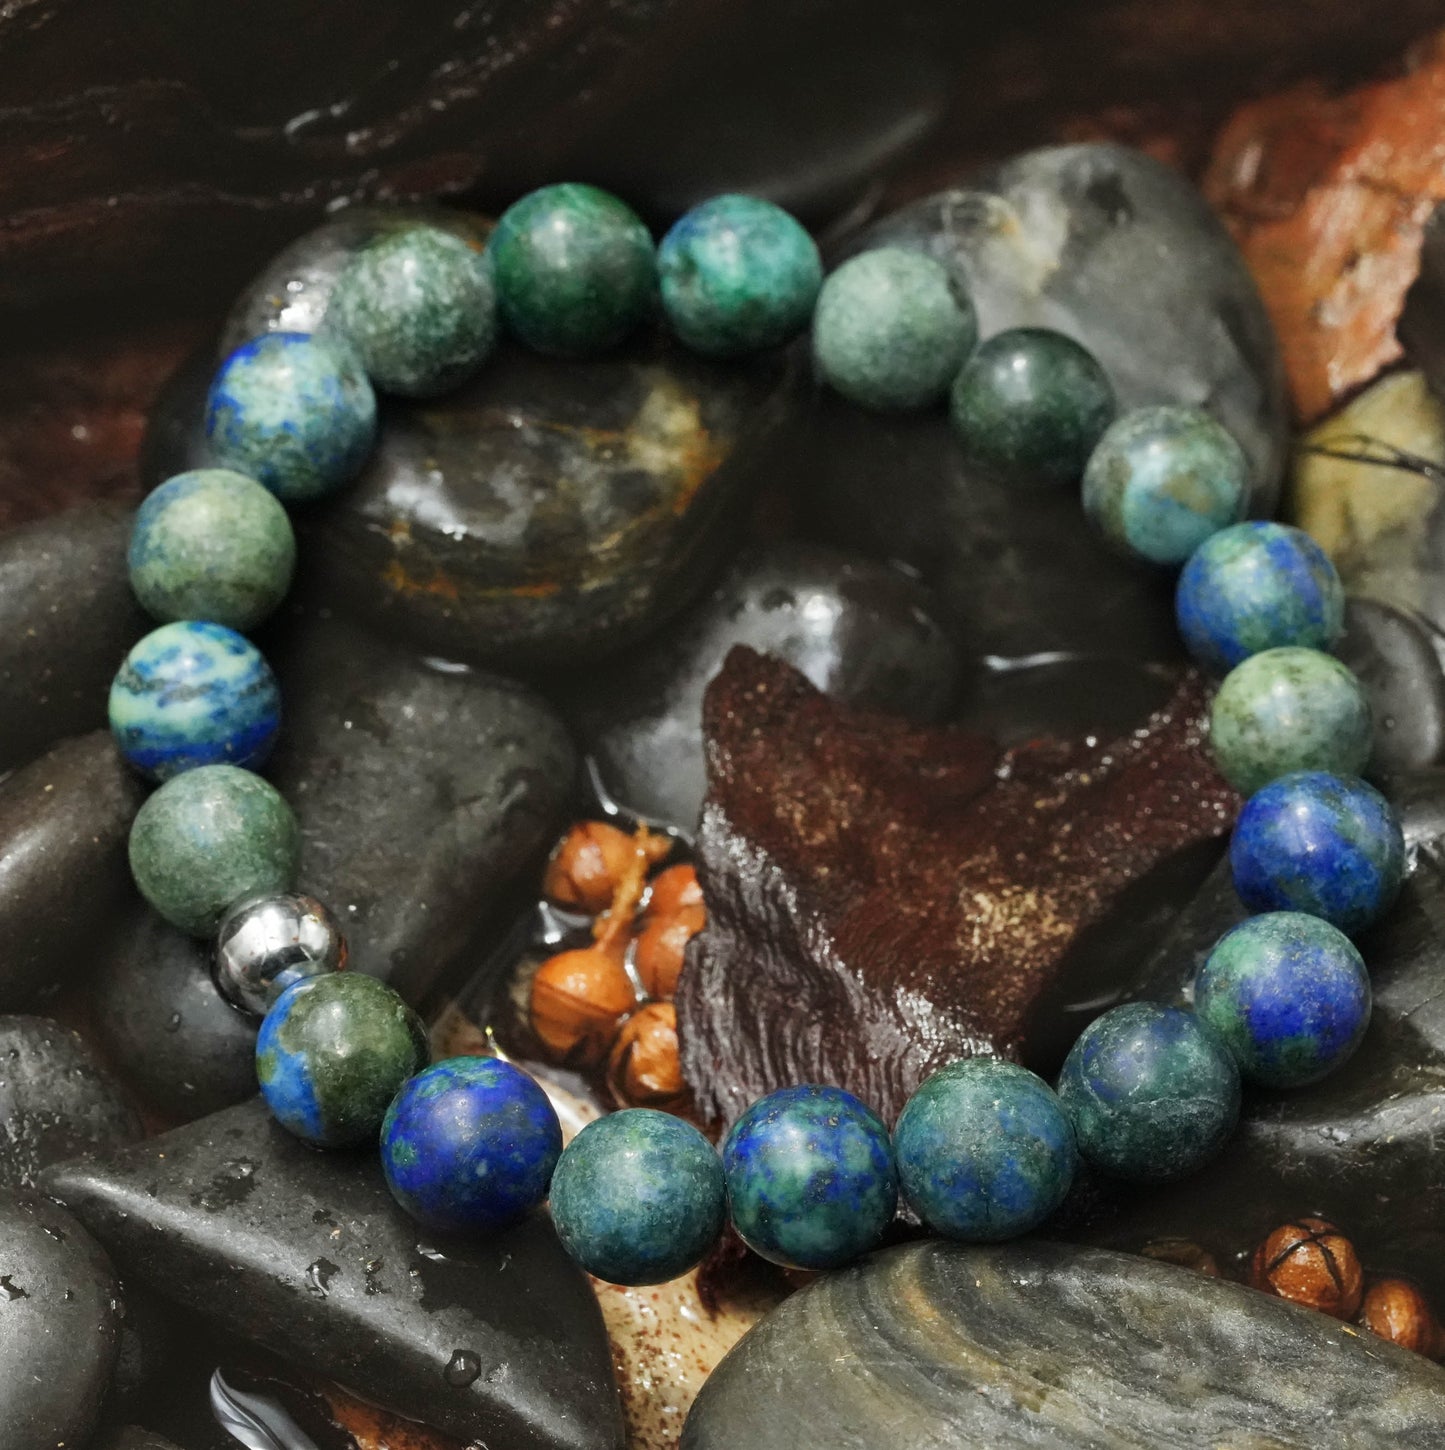 Azurite Gemstone Bracelet